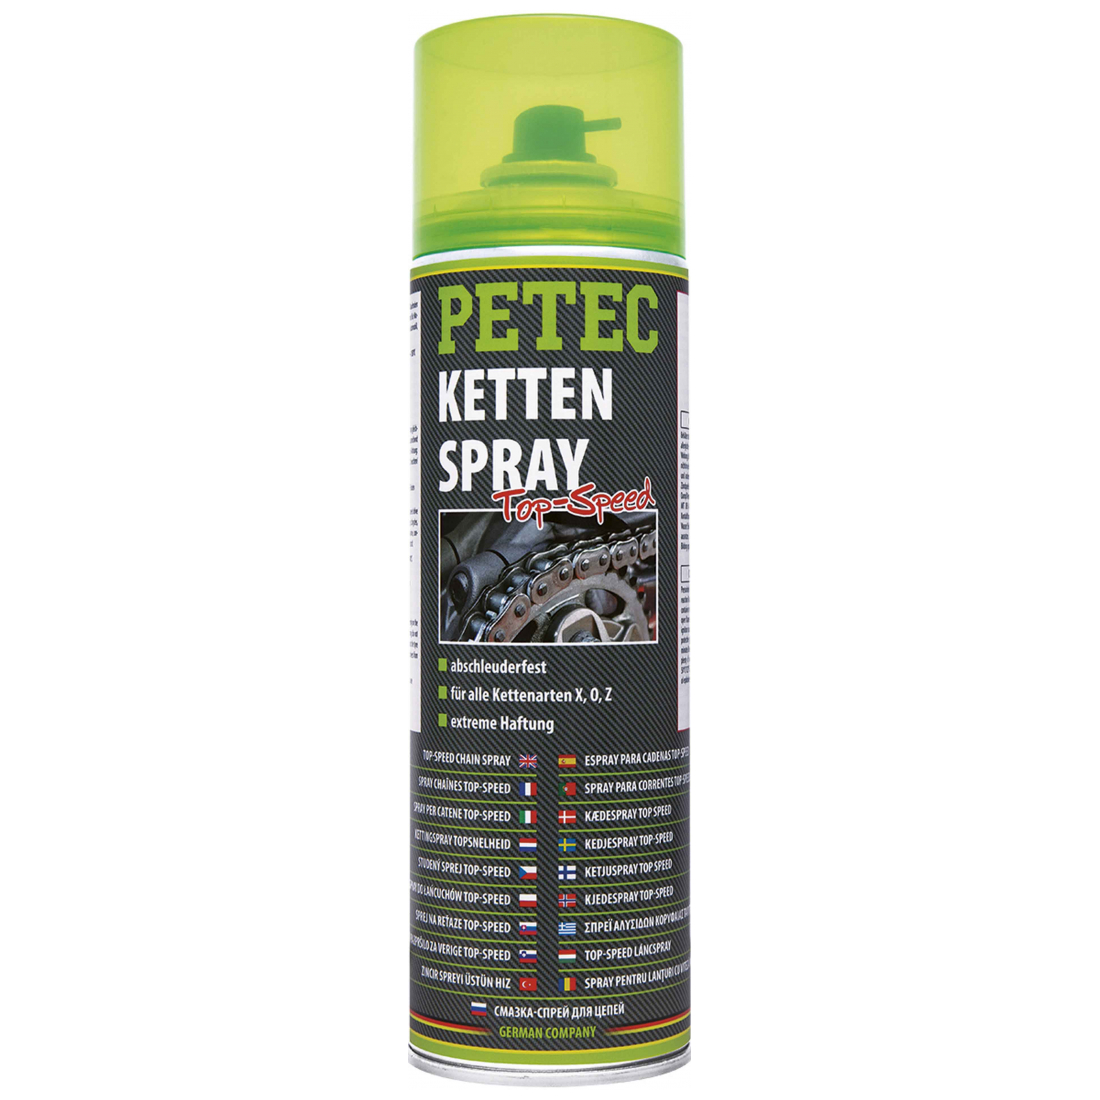 Petec Kettenspray 500 ml 70550